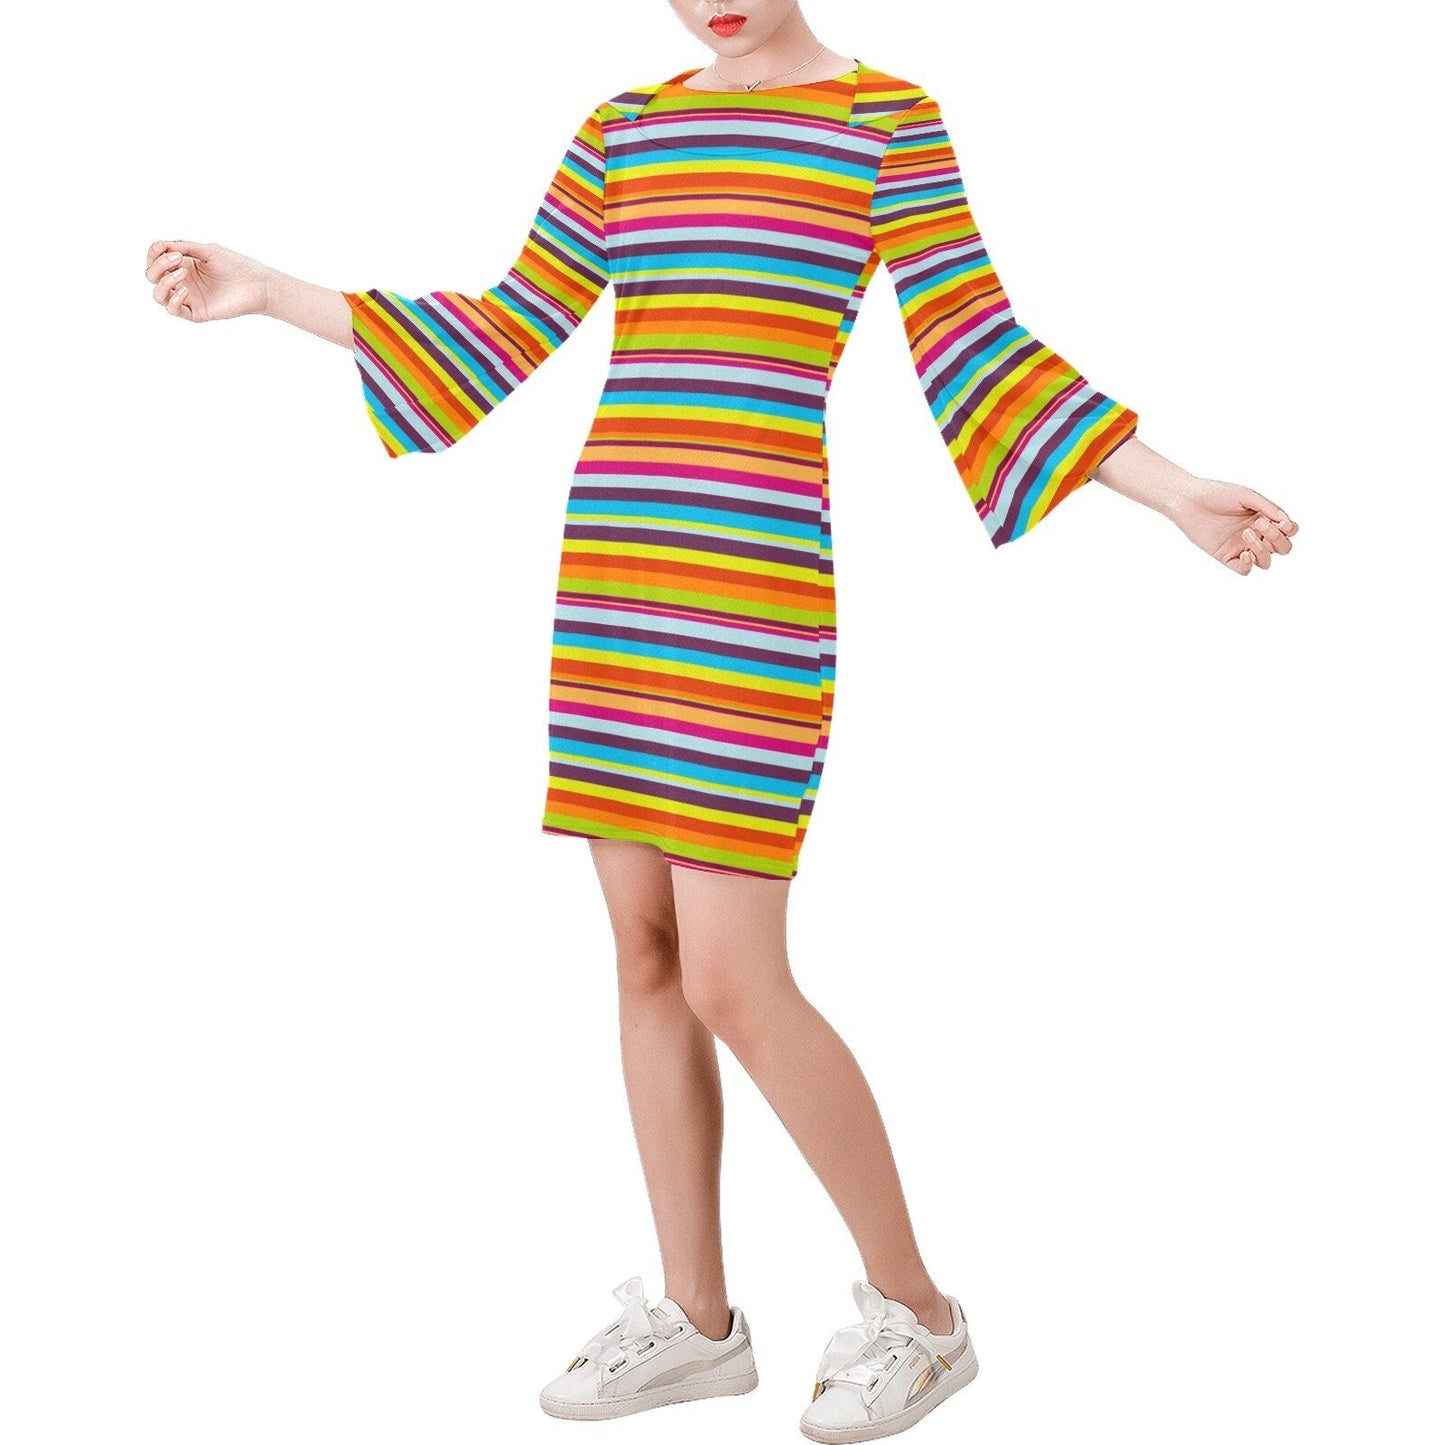 Stripe Dress, Retro Dress, Retro Dress, 70s style dress,Bell sleeve dress,Multicolor Stripe Dress,Hippie Dress, Shift Dress,Vintage inspired